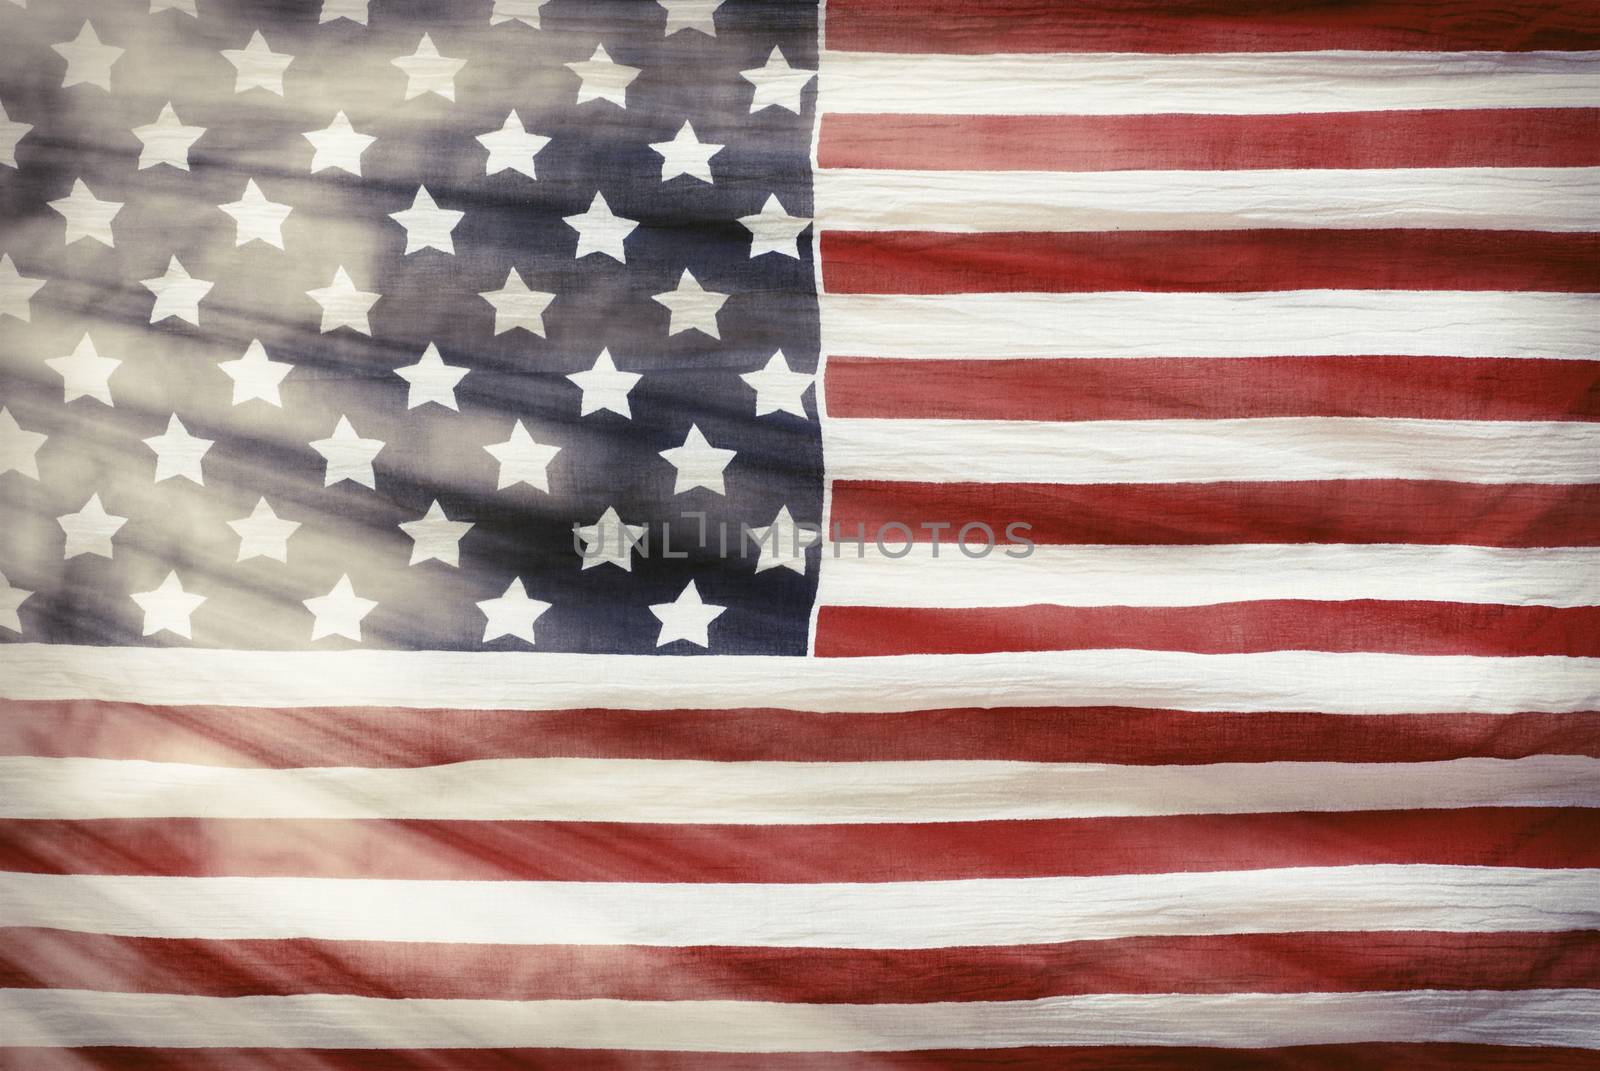  American flag by nejuras